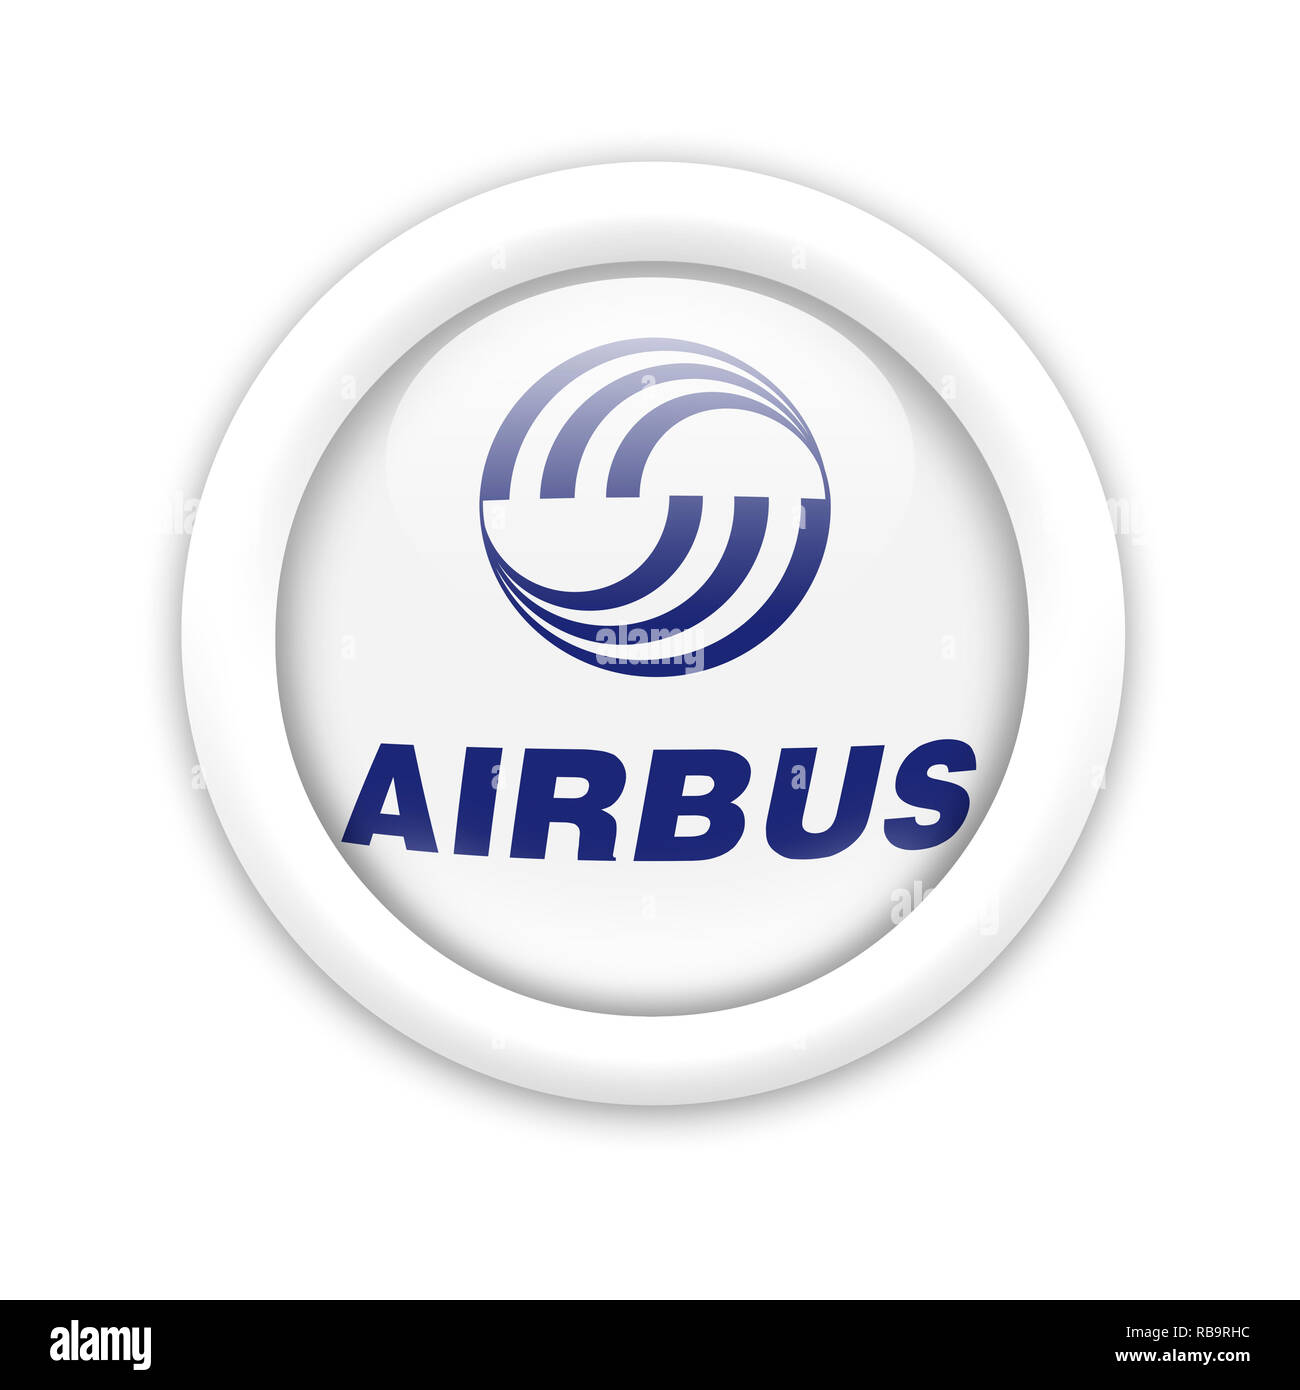 Airbus logo Stock Photo